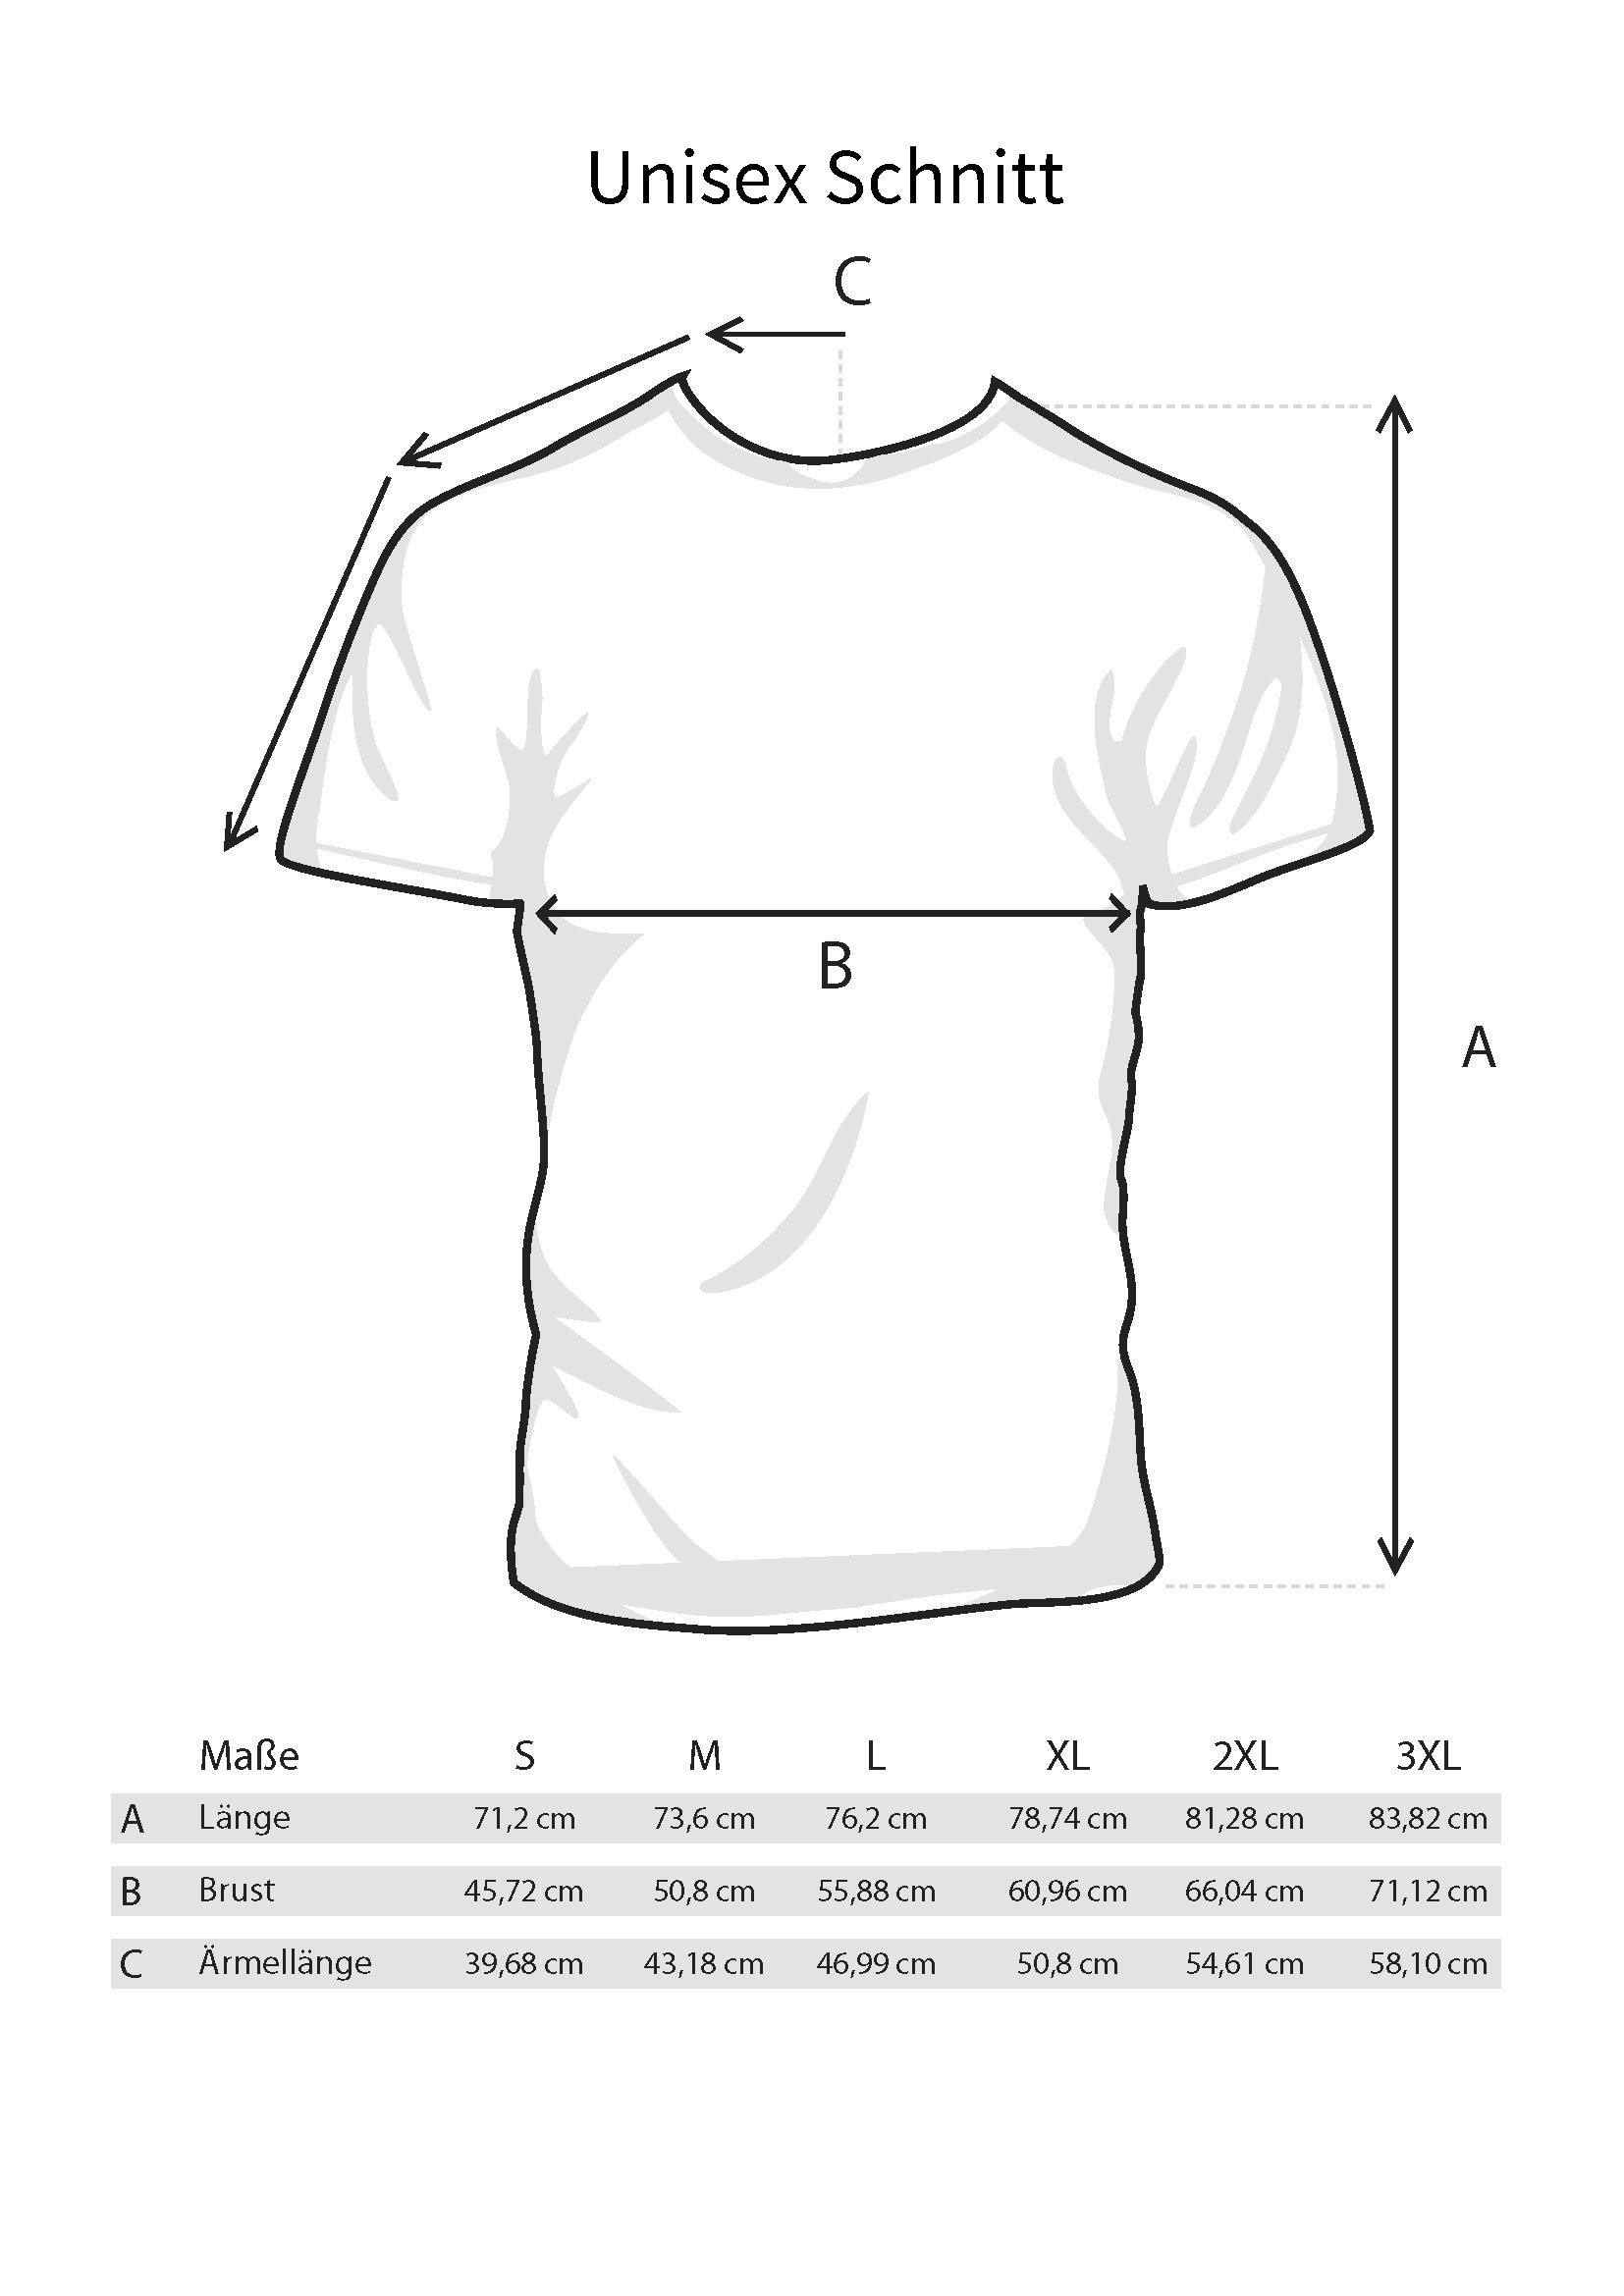 Suchtpotenzial Unisex T-Shirt